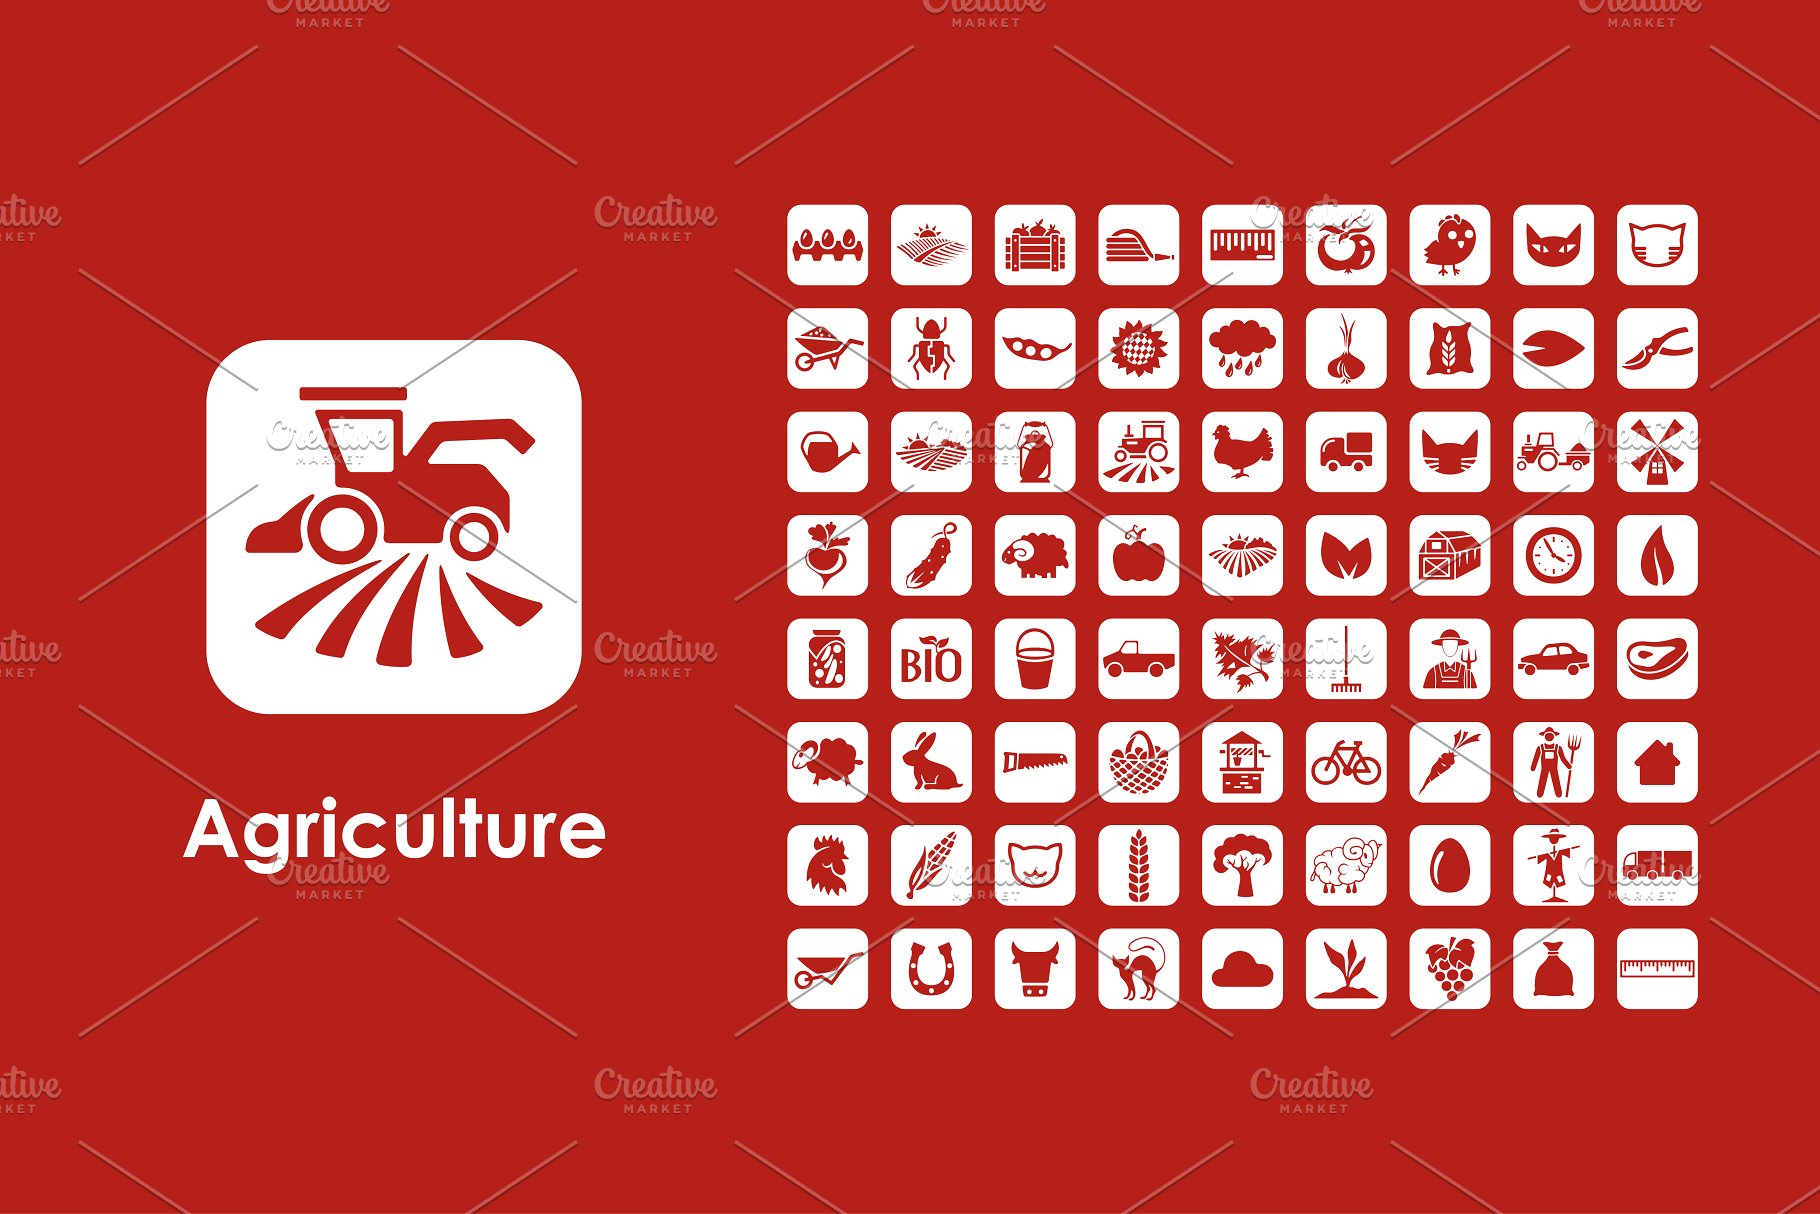 农业矢量图标下载 Agriculture icons #13